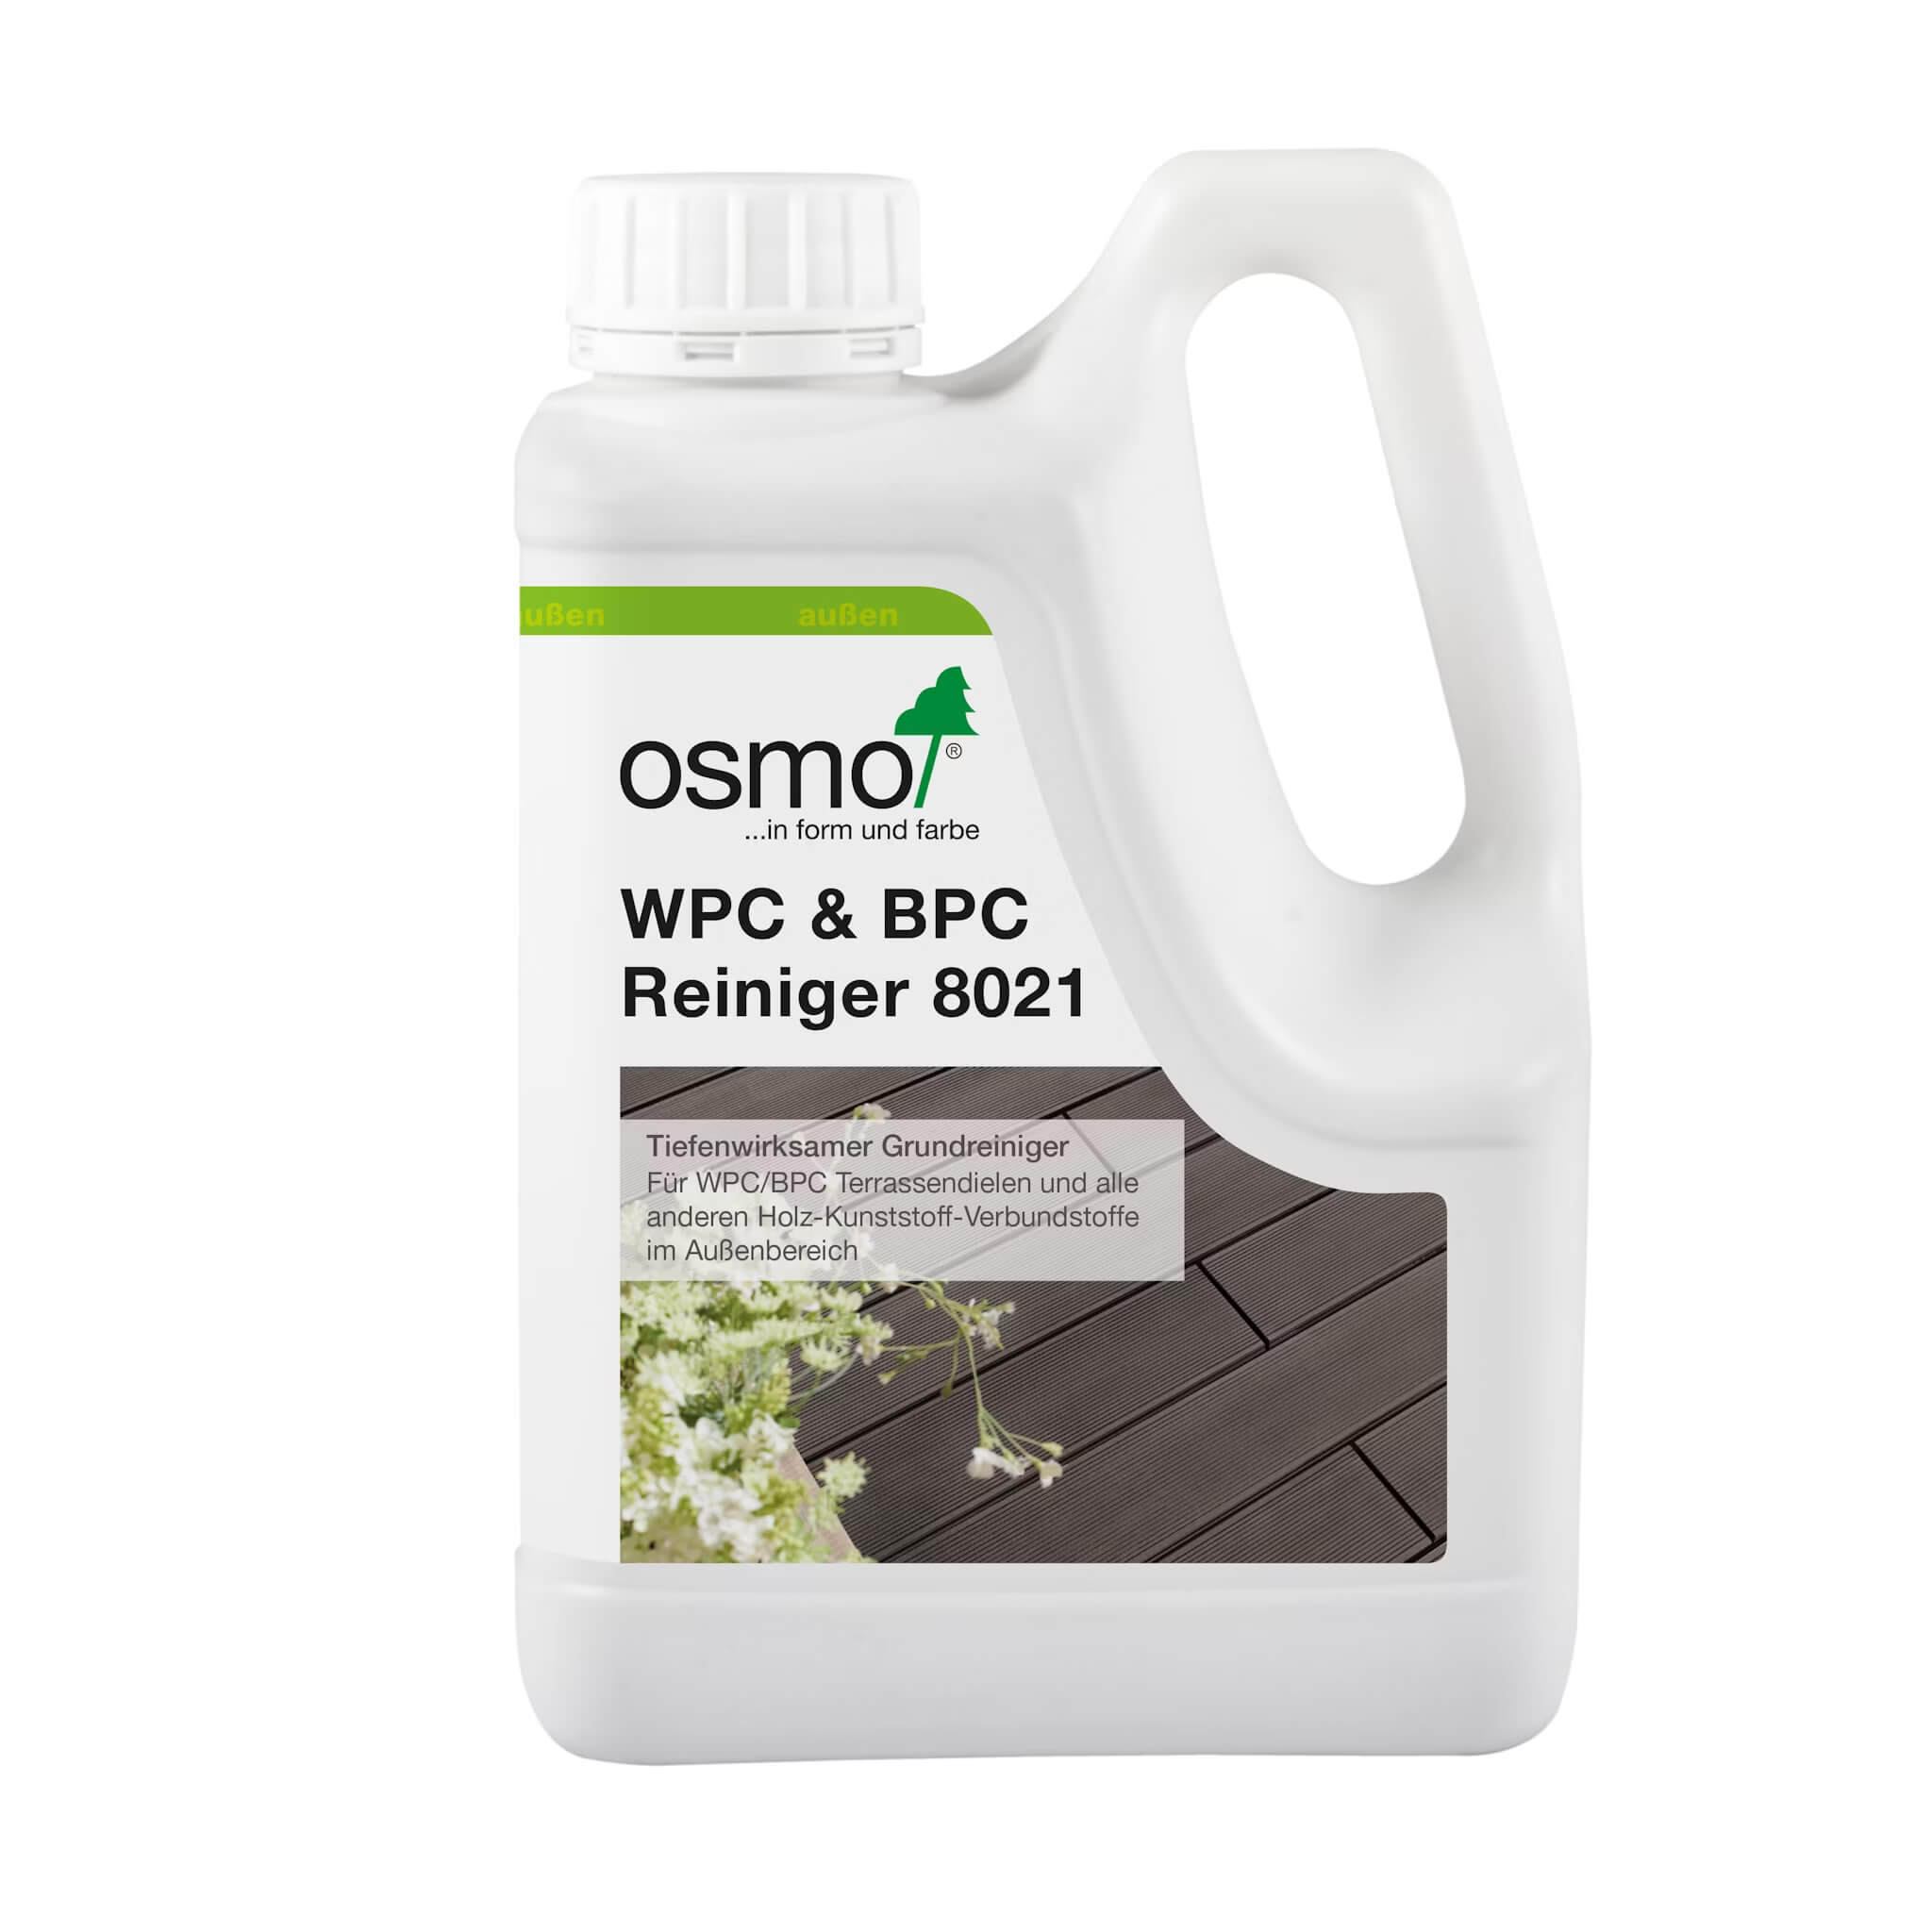 OSMO WPC & BPC CLEANER 8021